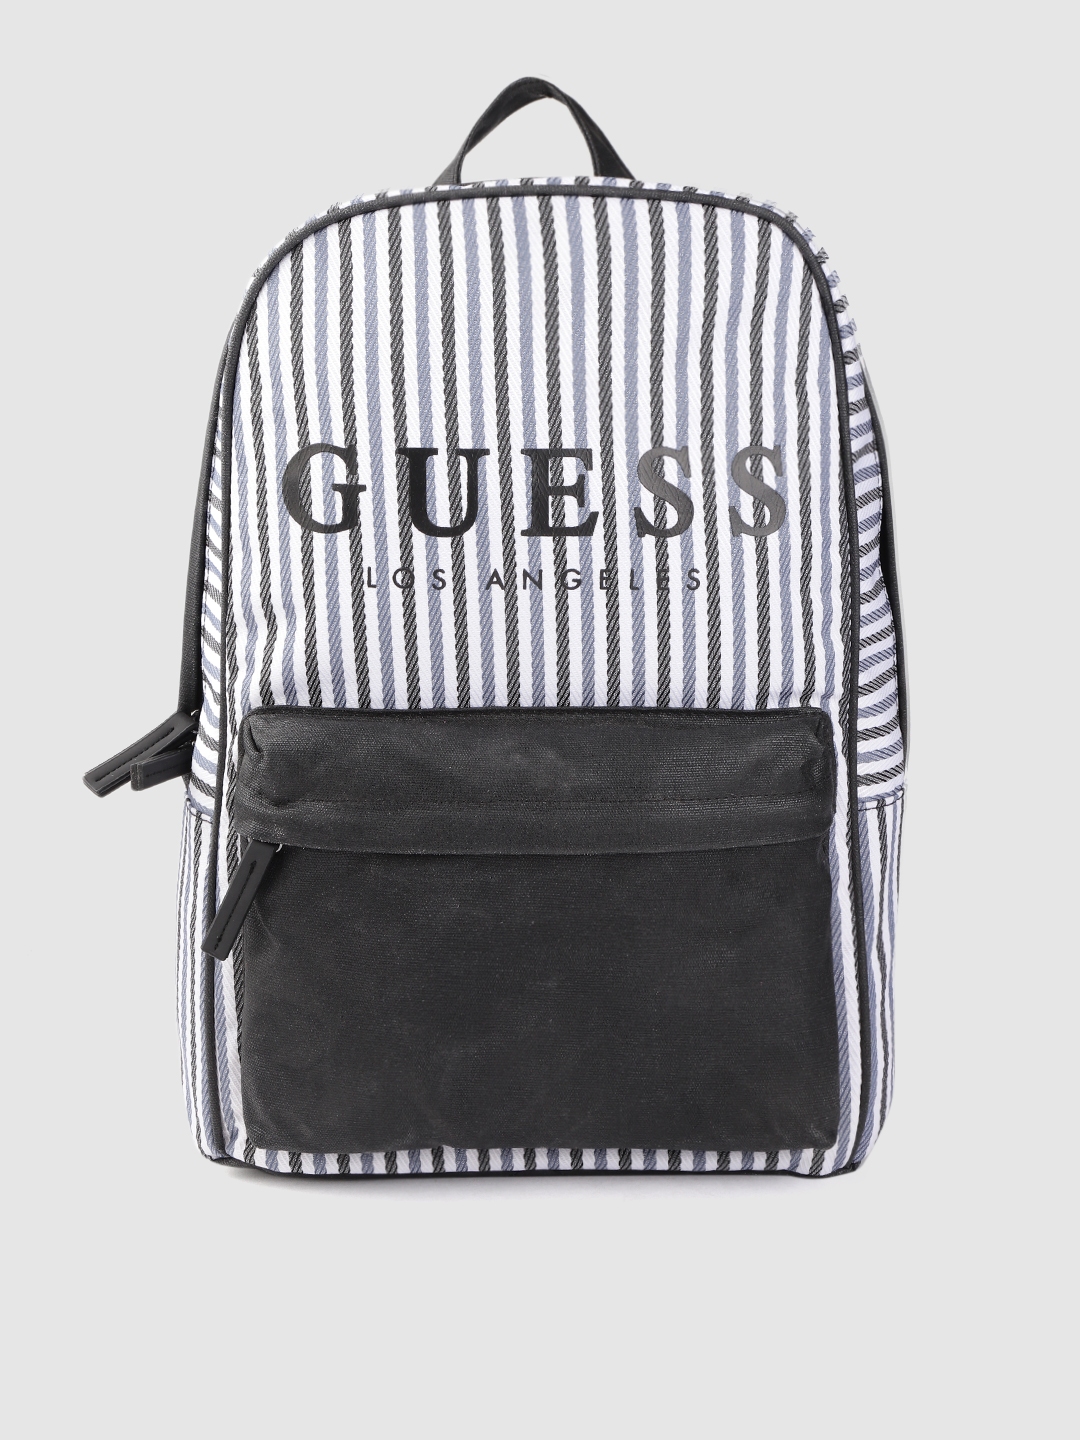 Buy GUESS Women Black & Blue Striped 14 Inch Laptop Backpack ...